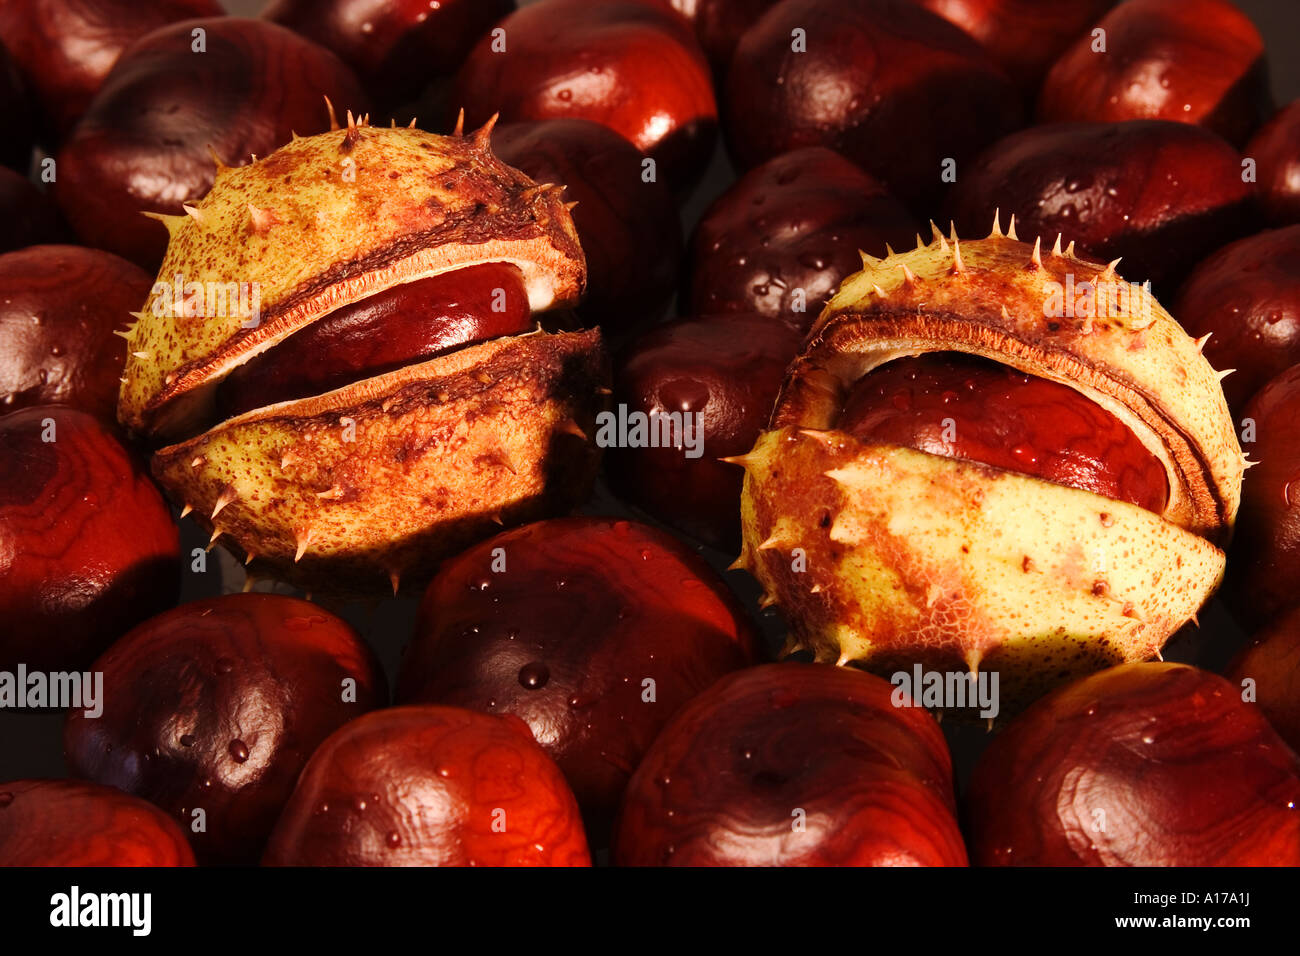 chestnuts Stock Photo